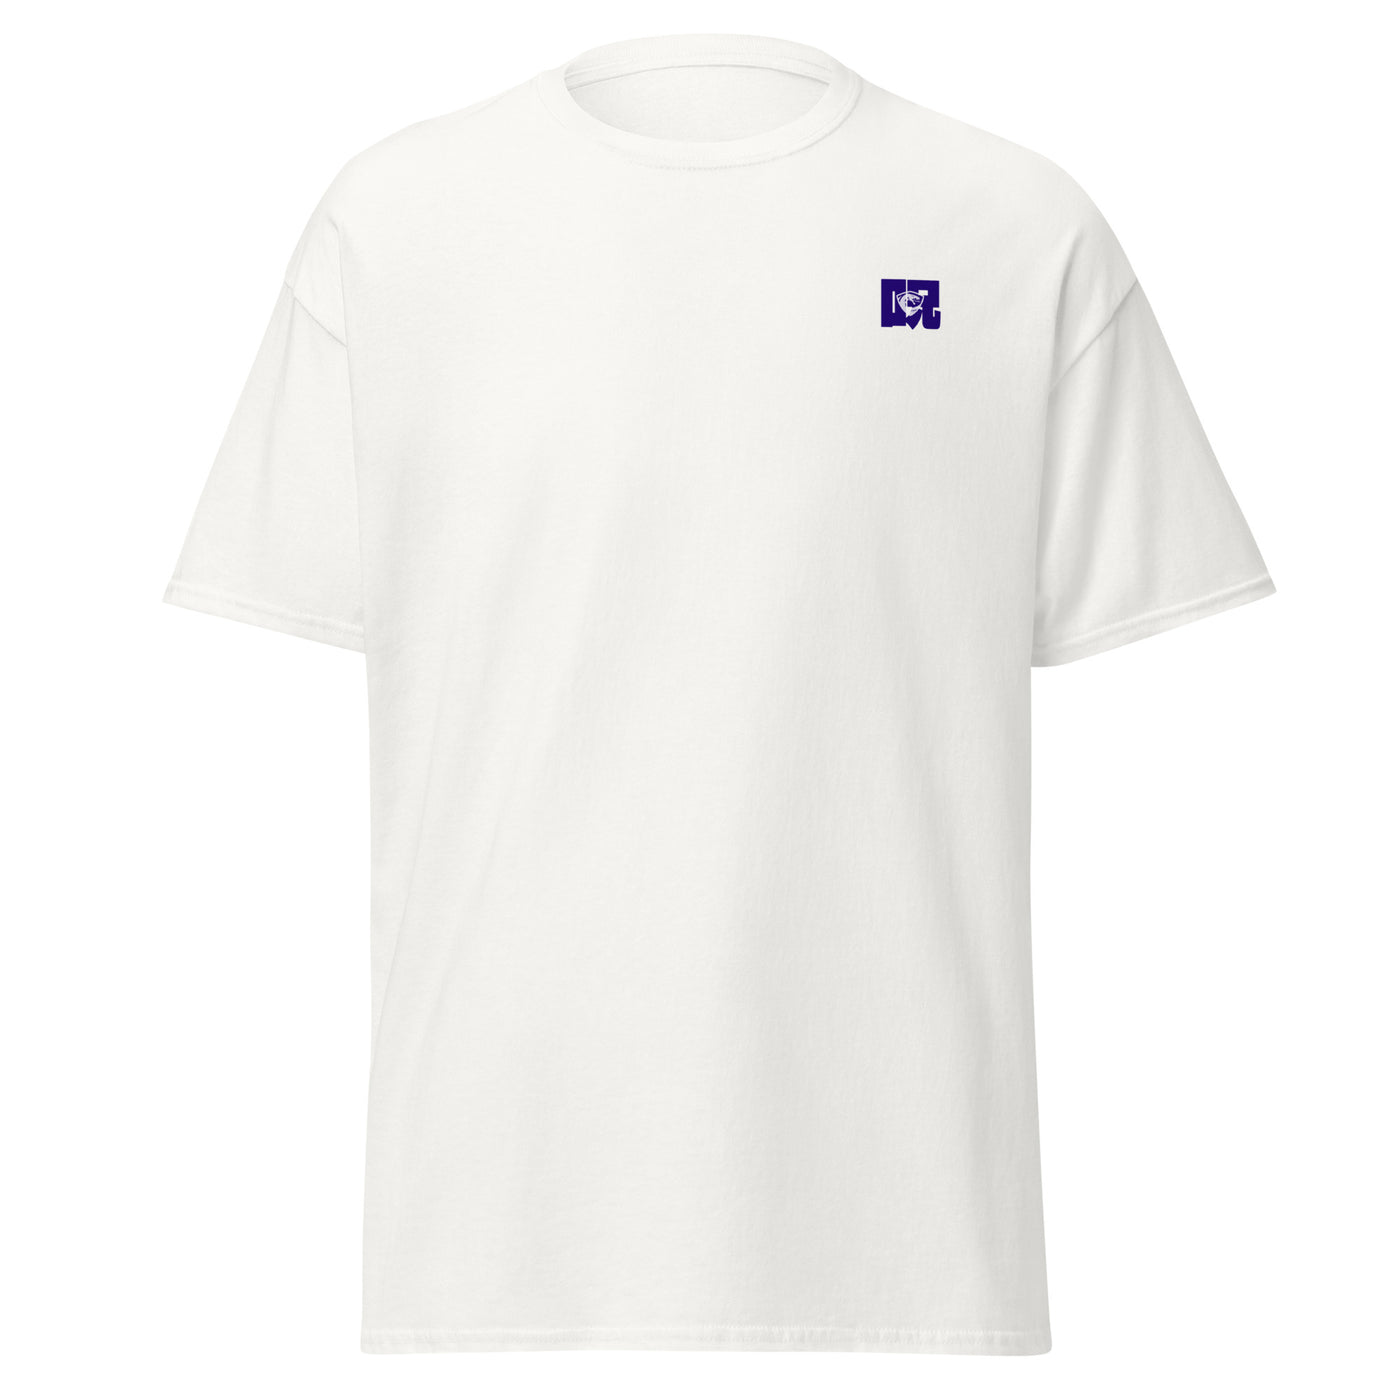 Clever Unisex T-Shirt